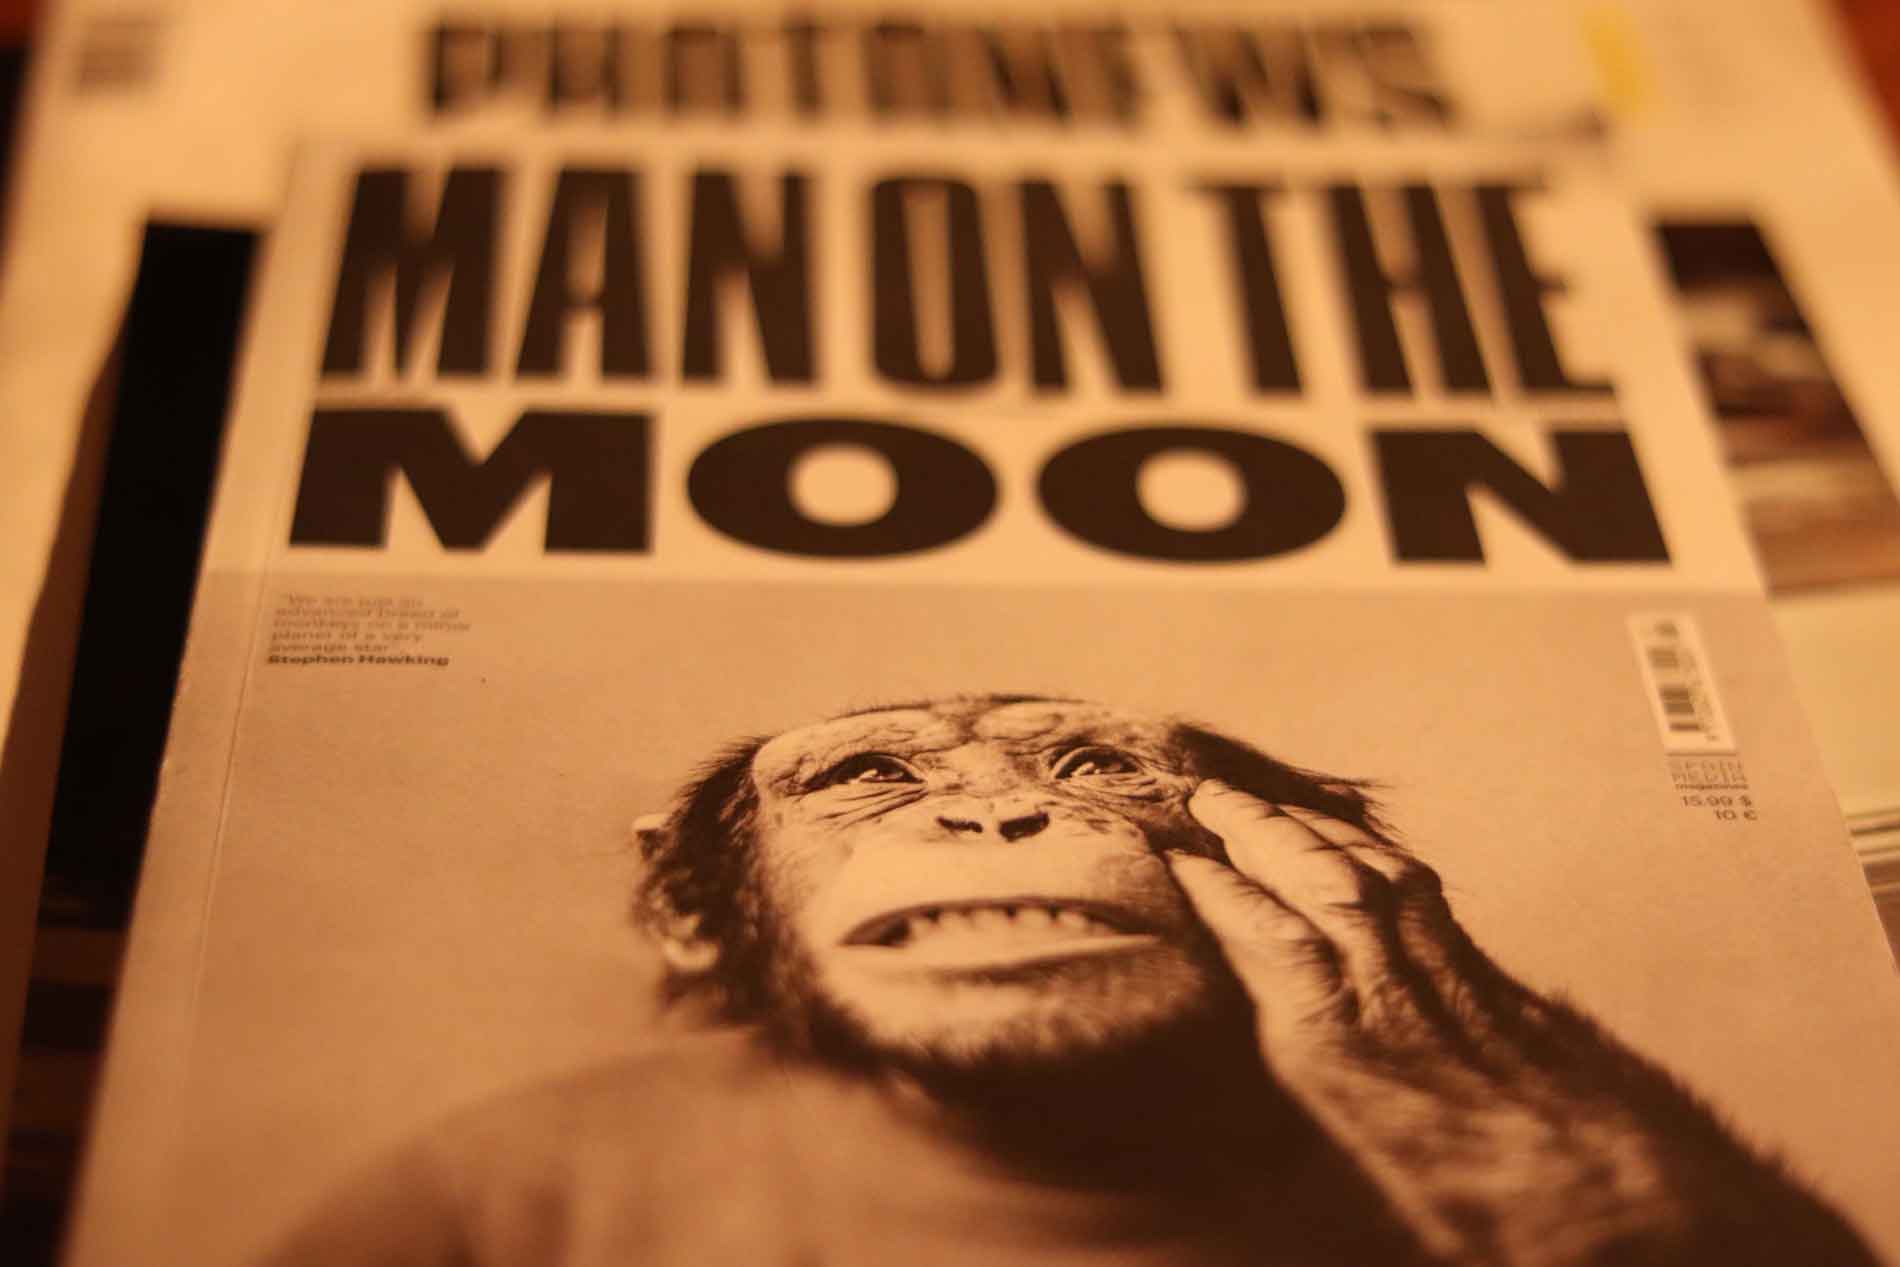 newspaper headline with monkey